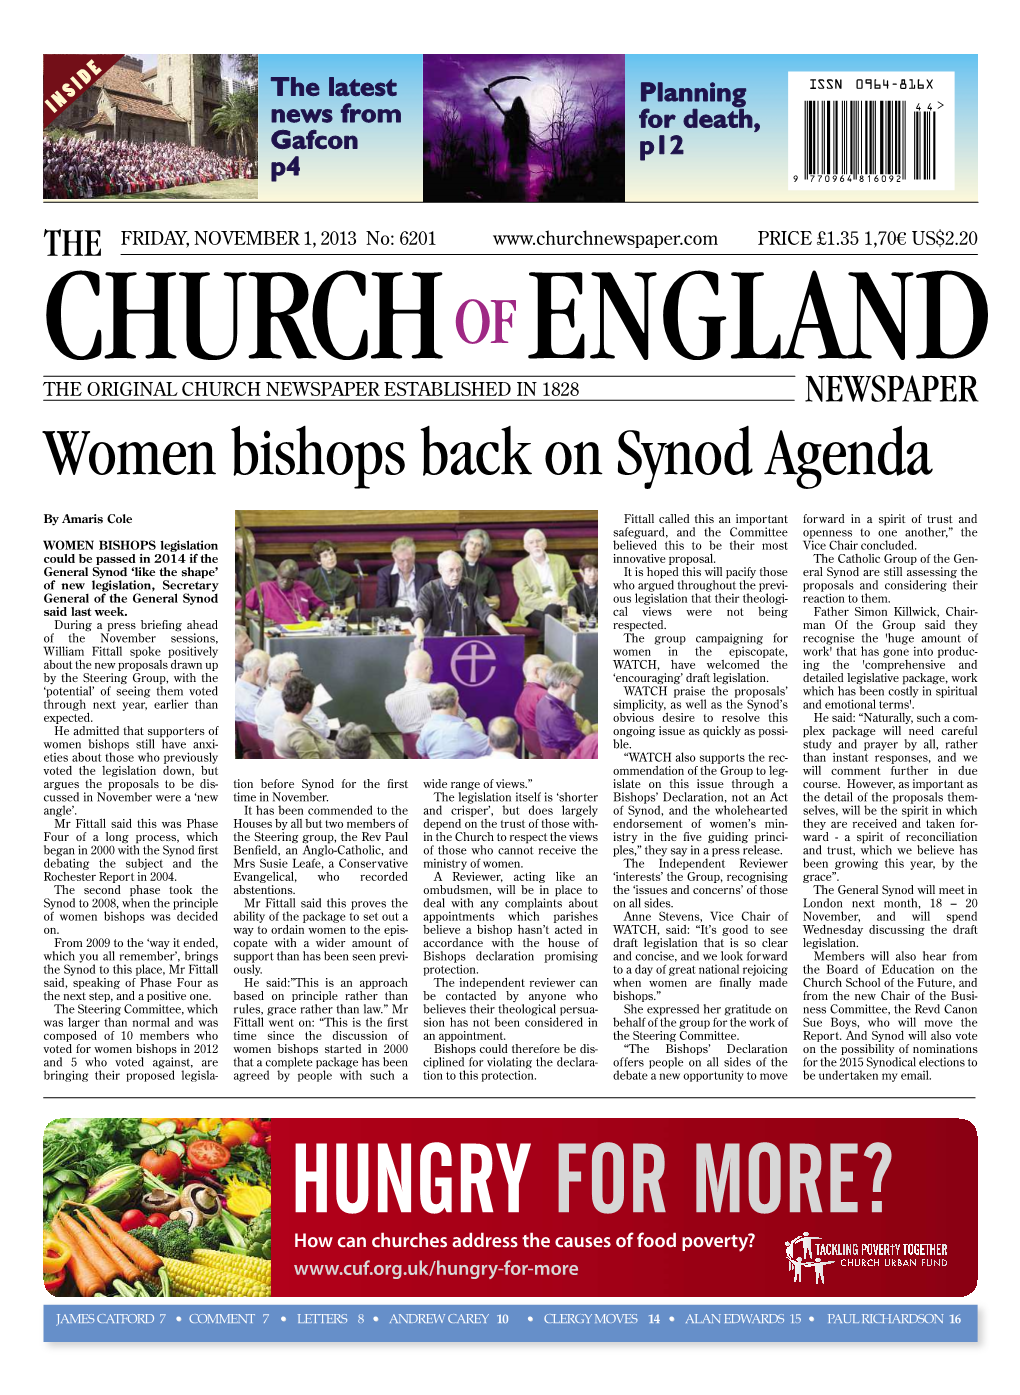 Women Bishops Back on Synod Agenda